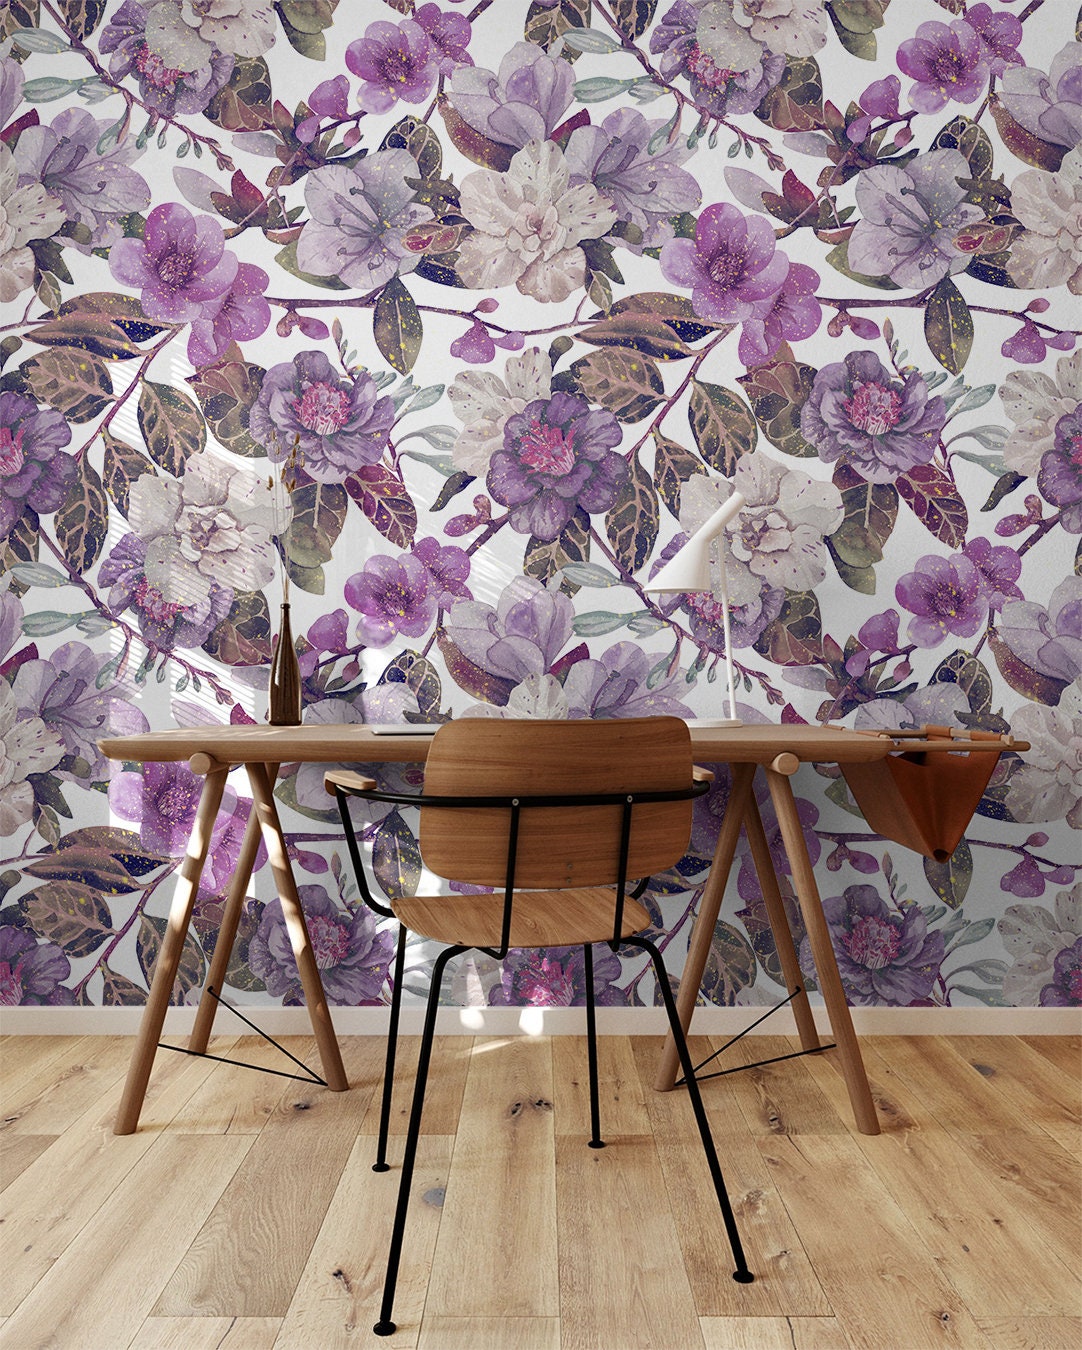 Purple Tropical Floral Wallpaper | Removable Wallpaper | Peel And Stick Wallpaper | Wall Mural Wallpaper | Wall Paper Peel And Stick 2325 - JamesAndColors